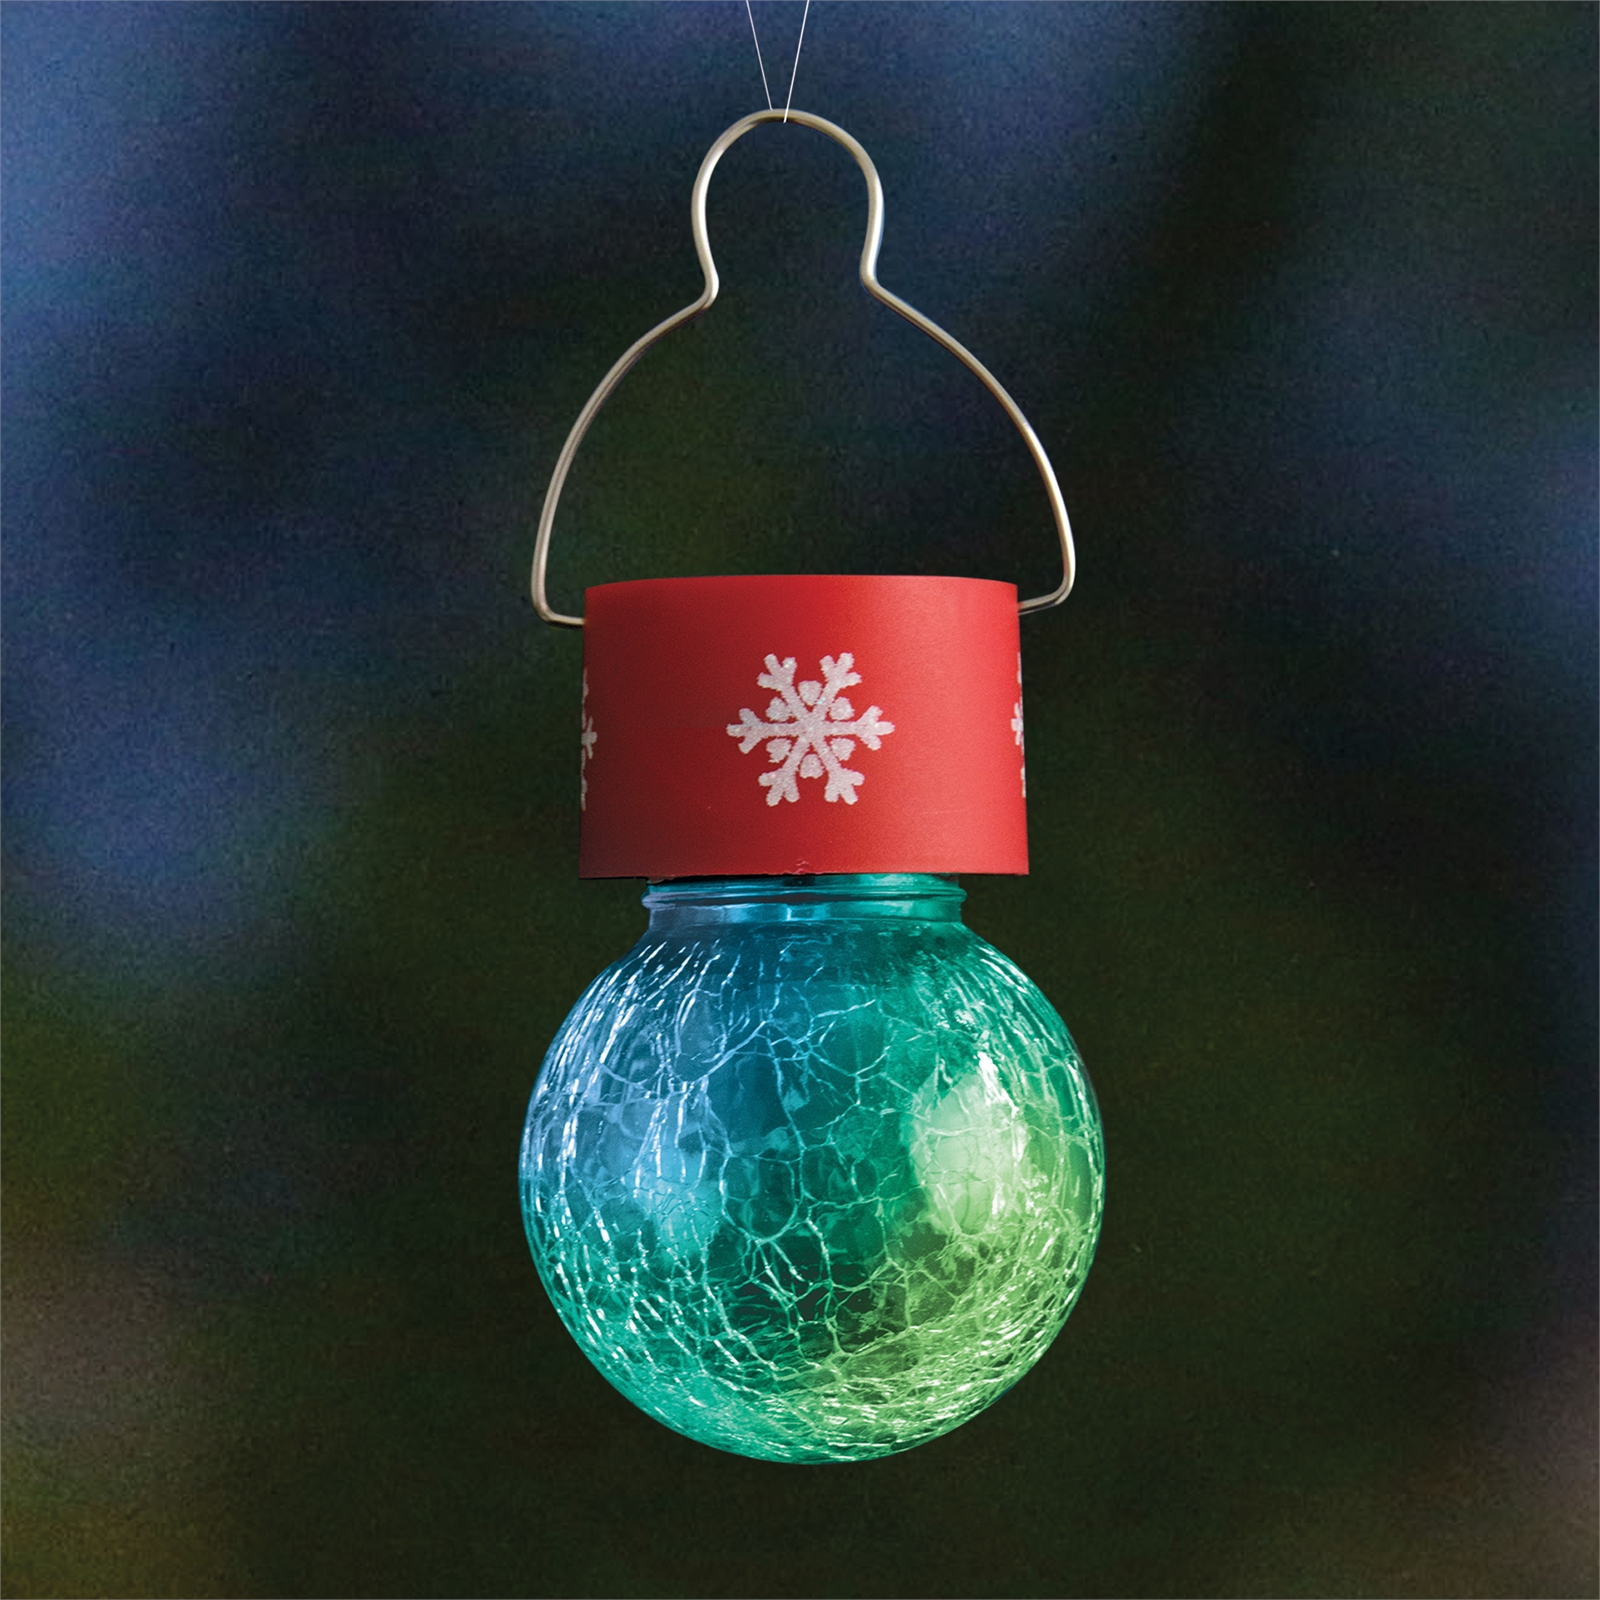 Lytworx 6cm Hanging LED Crackle Ball Festive Solar Light